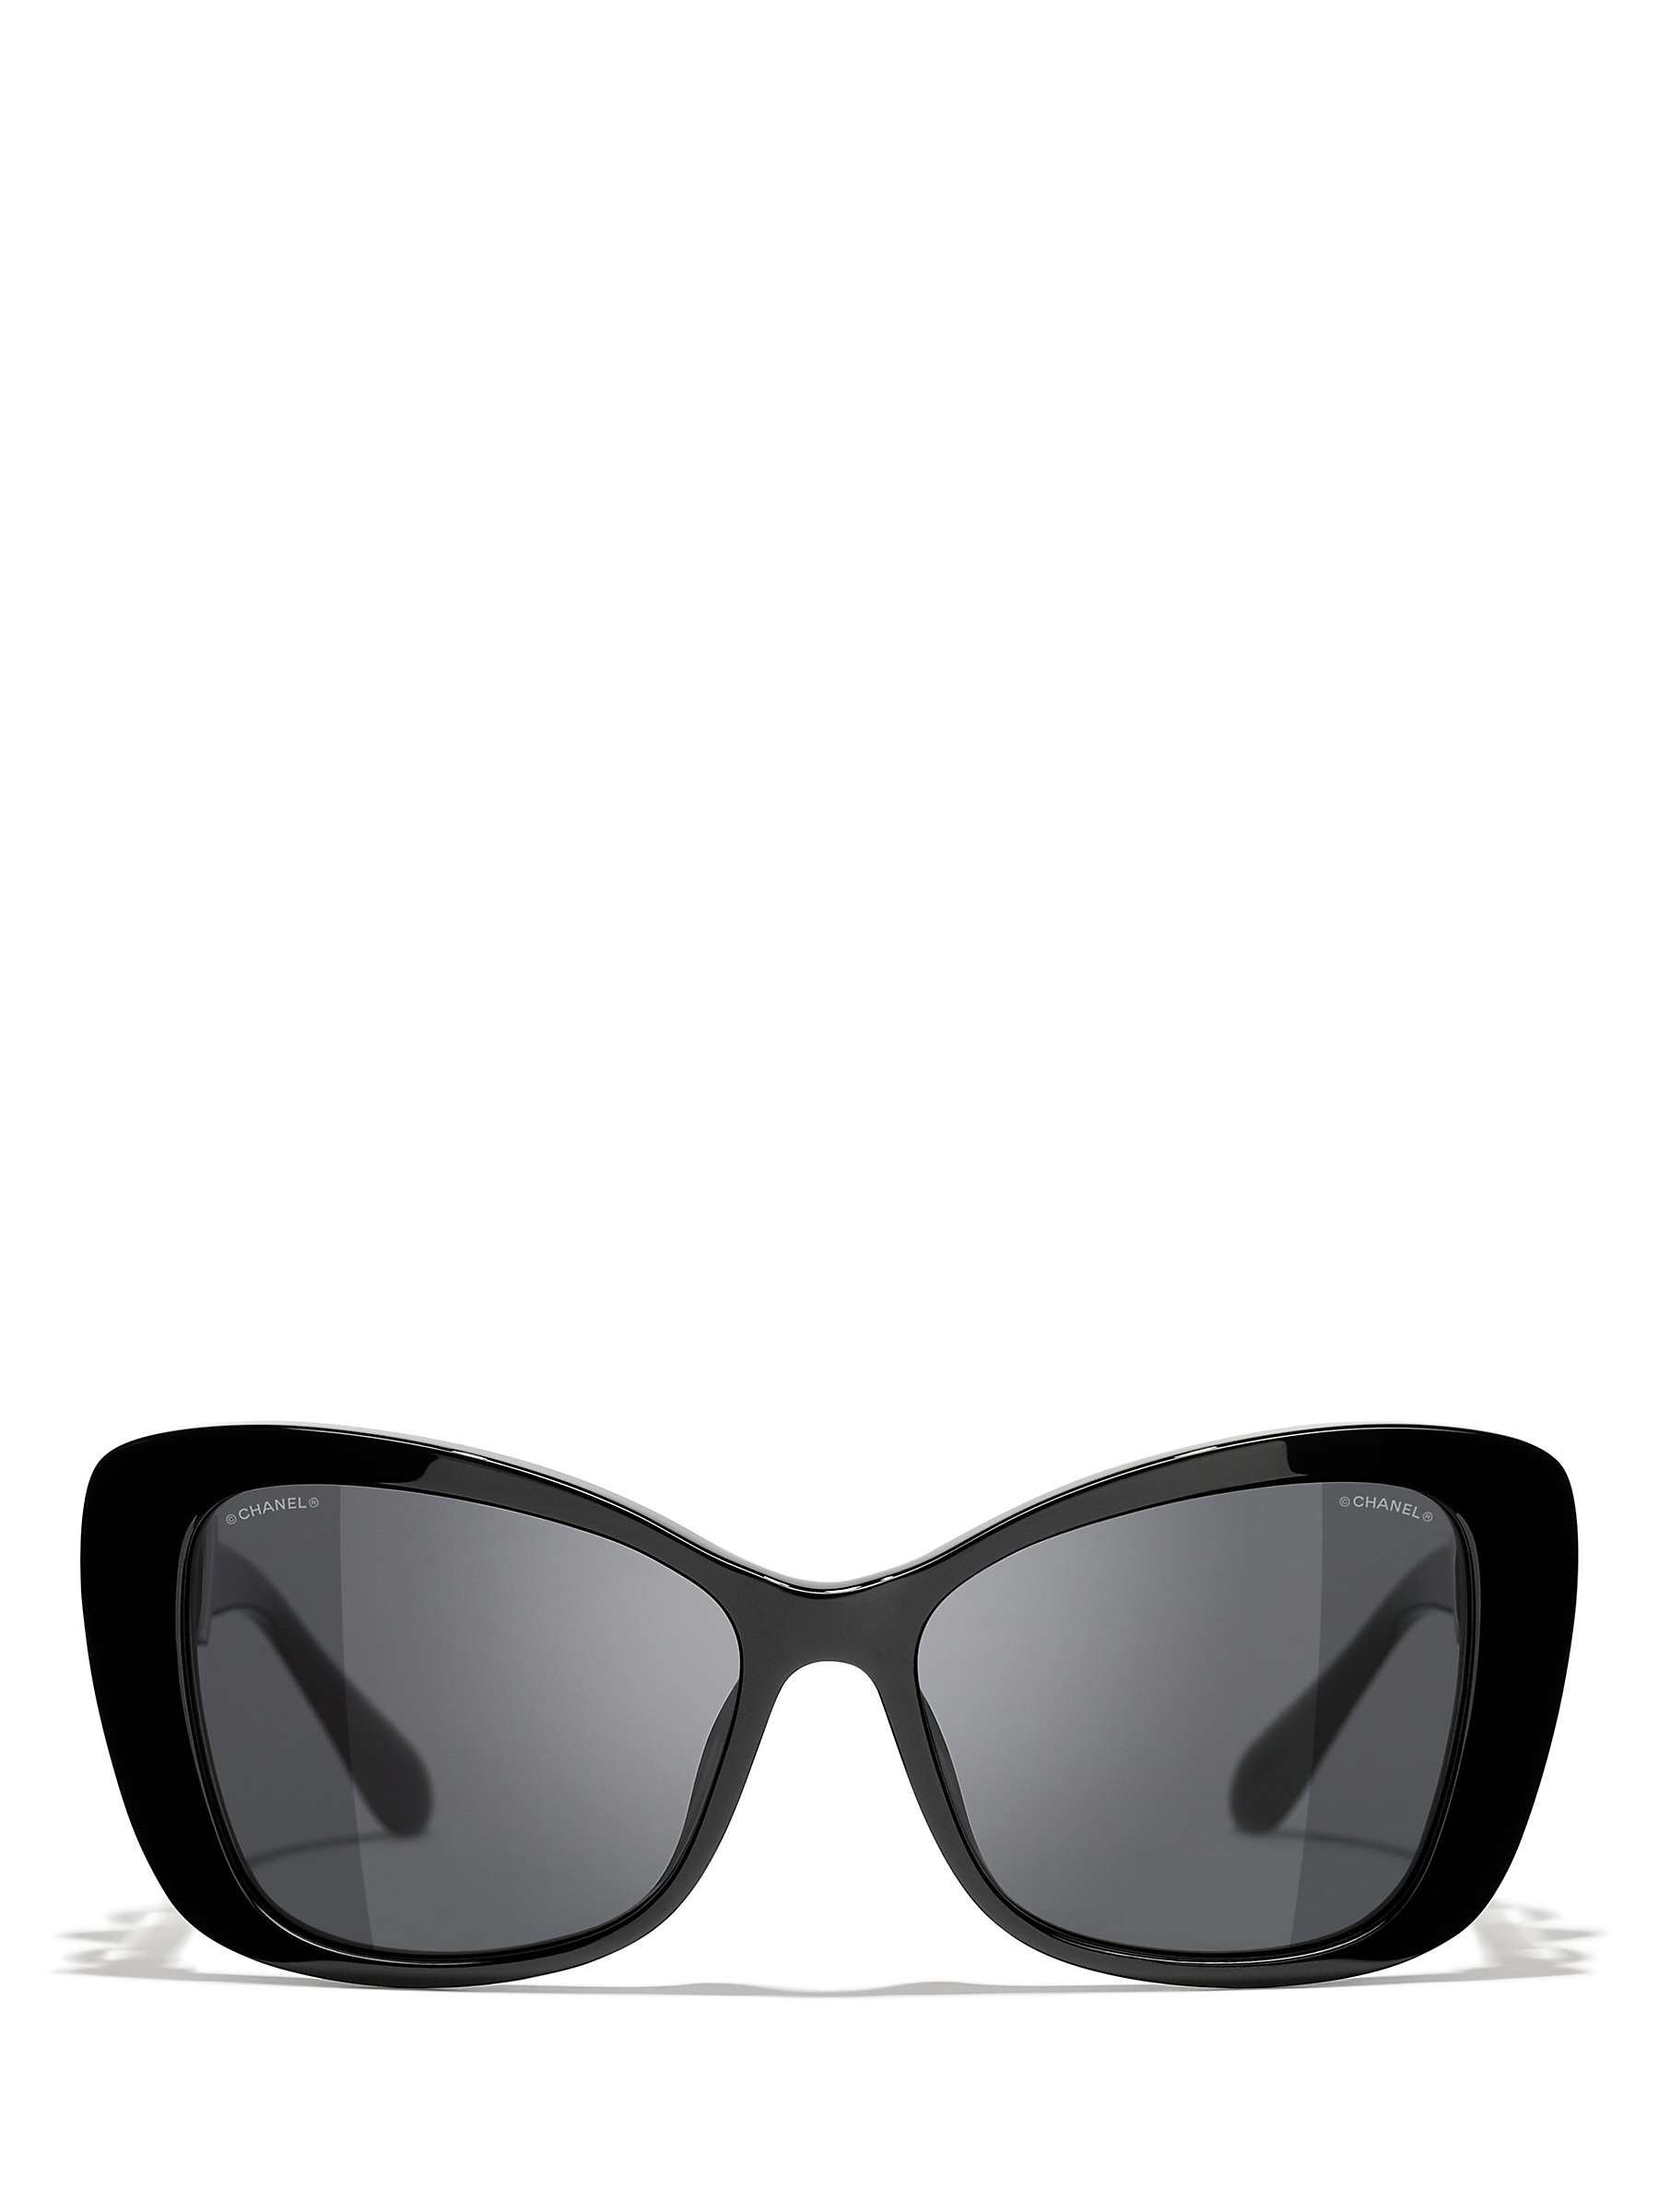 CHANEL Cat Eye Sunglasses CH5445H Black/Grey Gradient at John Lewis ...